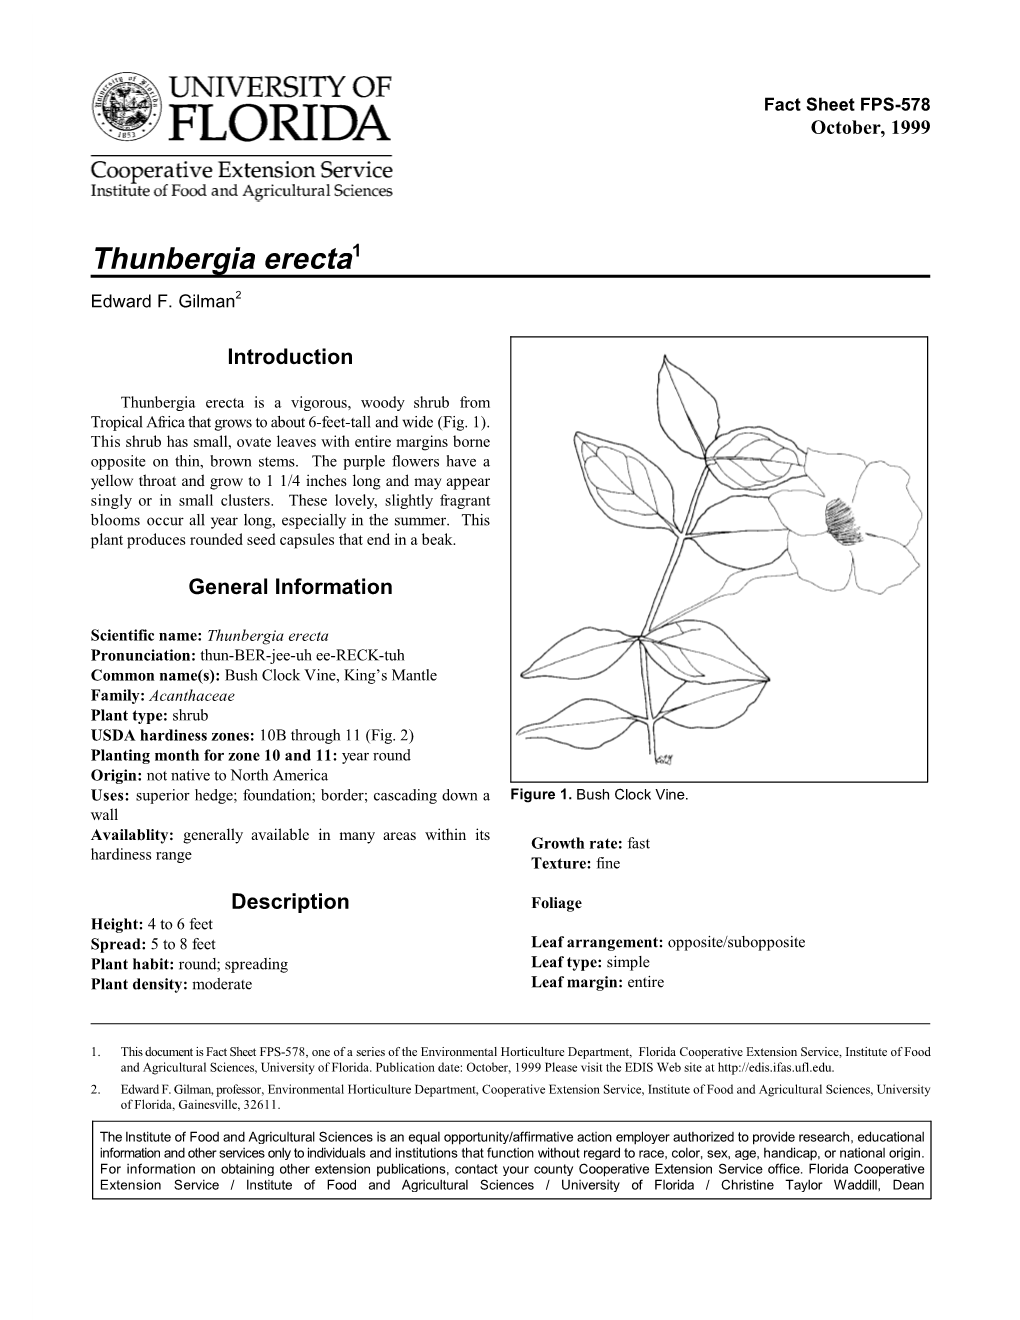 Thunbergia Erecta1